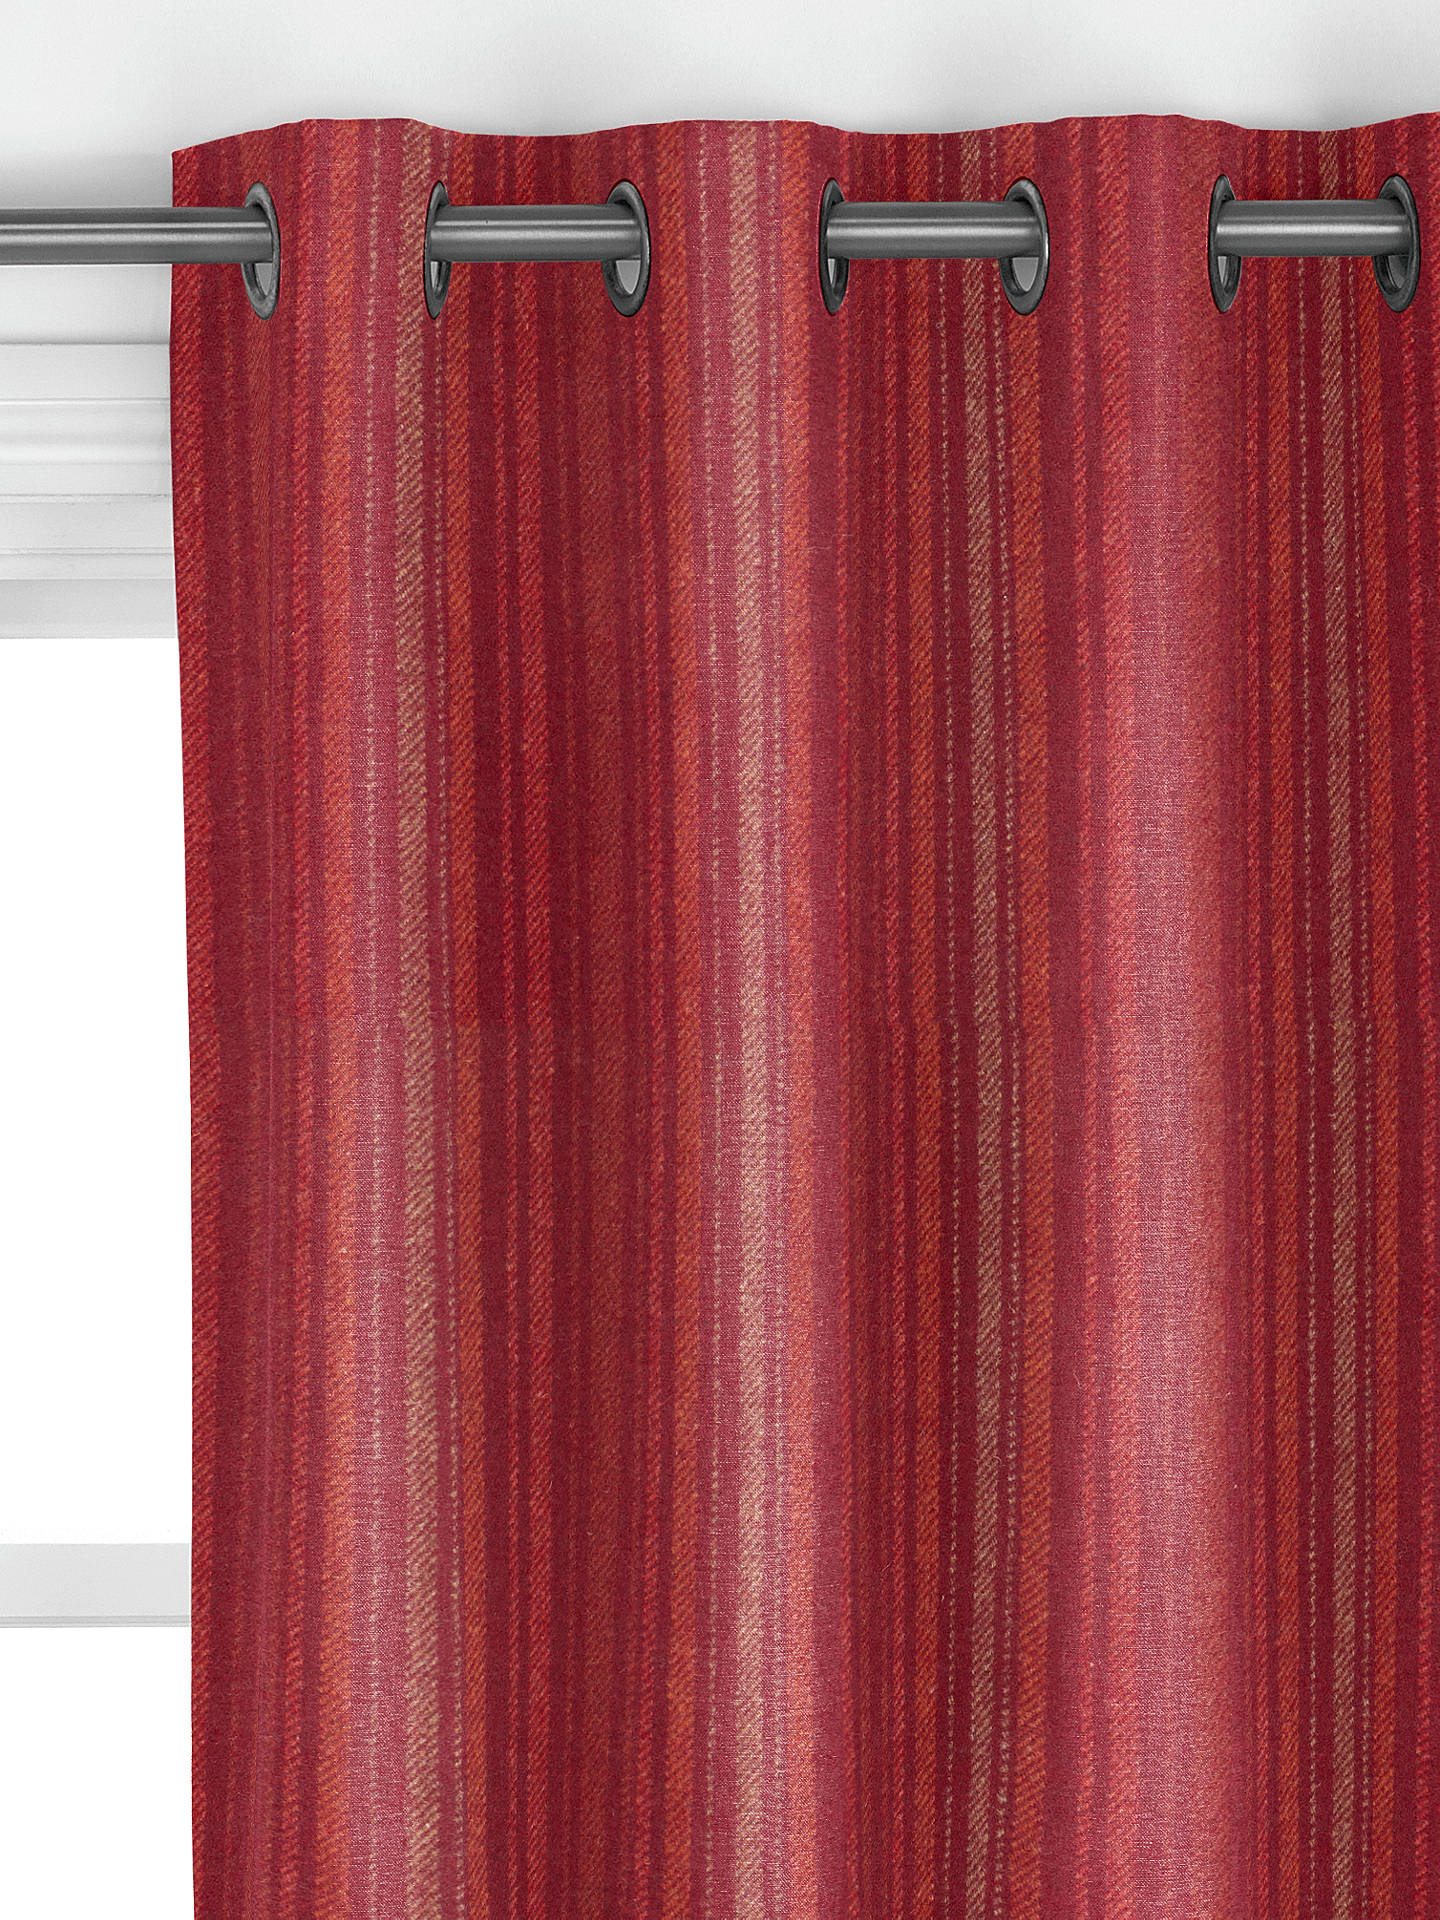 John Lewis & Partners Fine Stripe Made to Measure Curtains, Plum